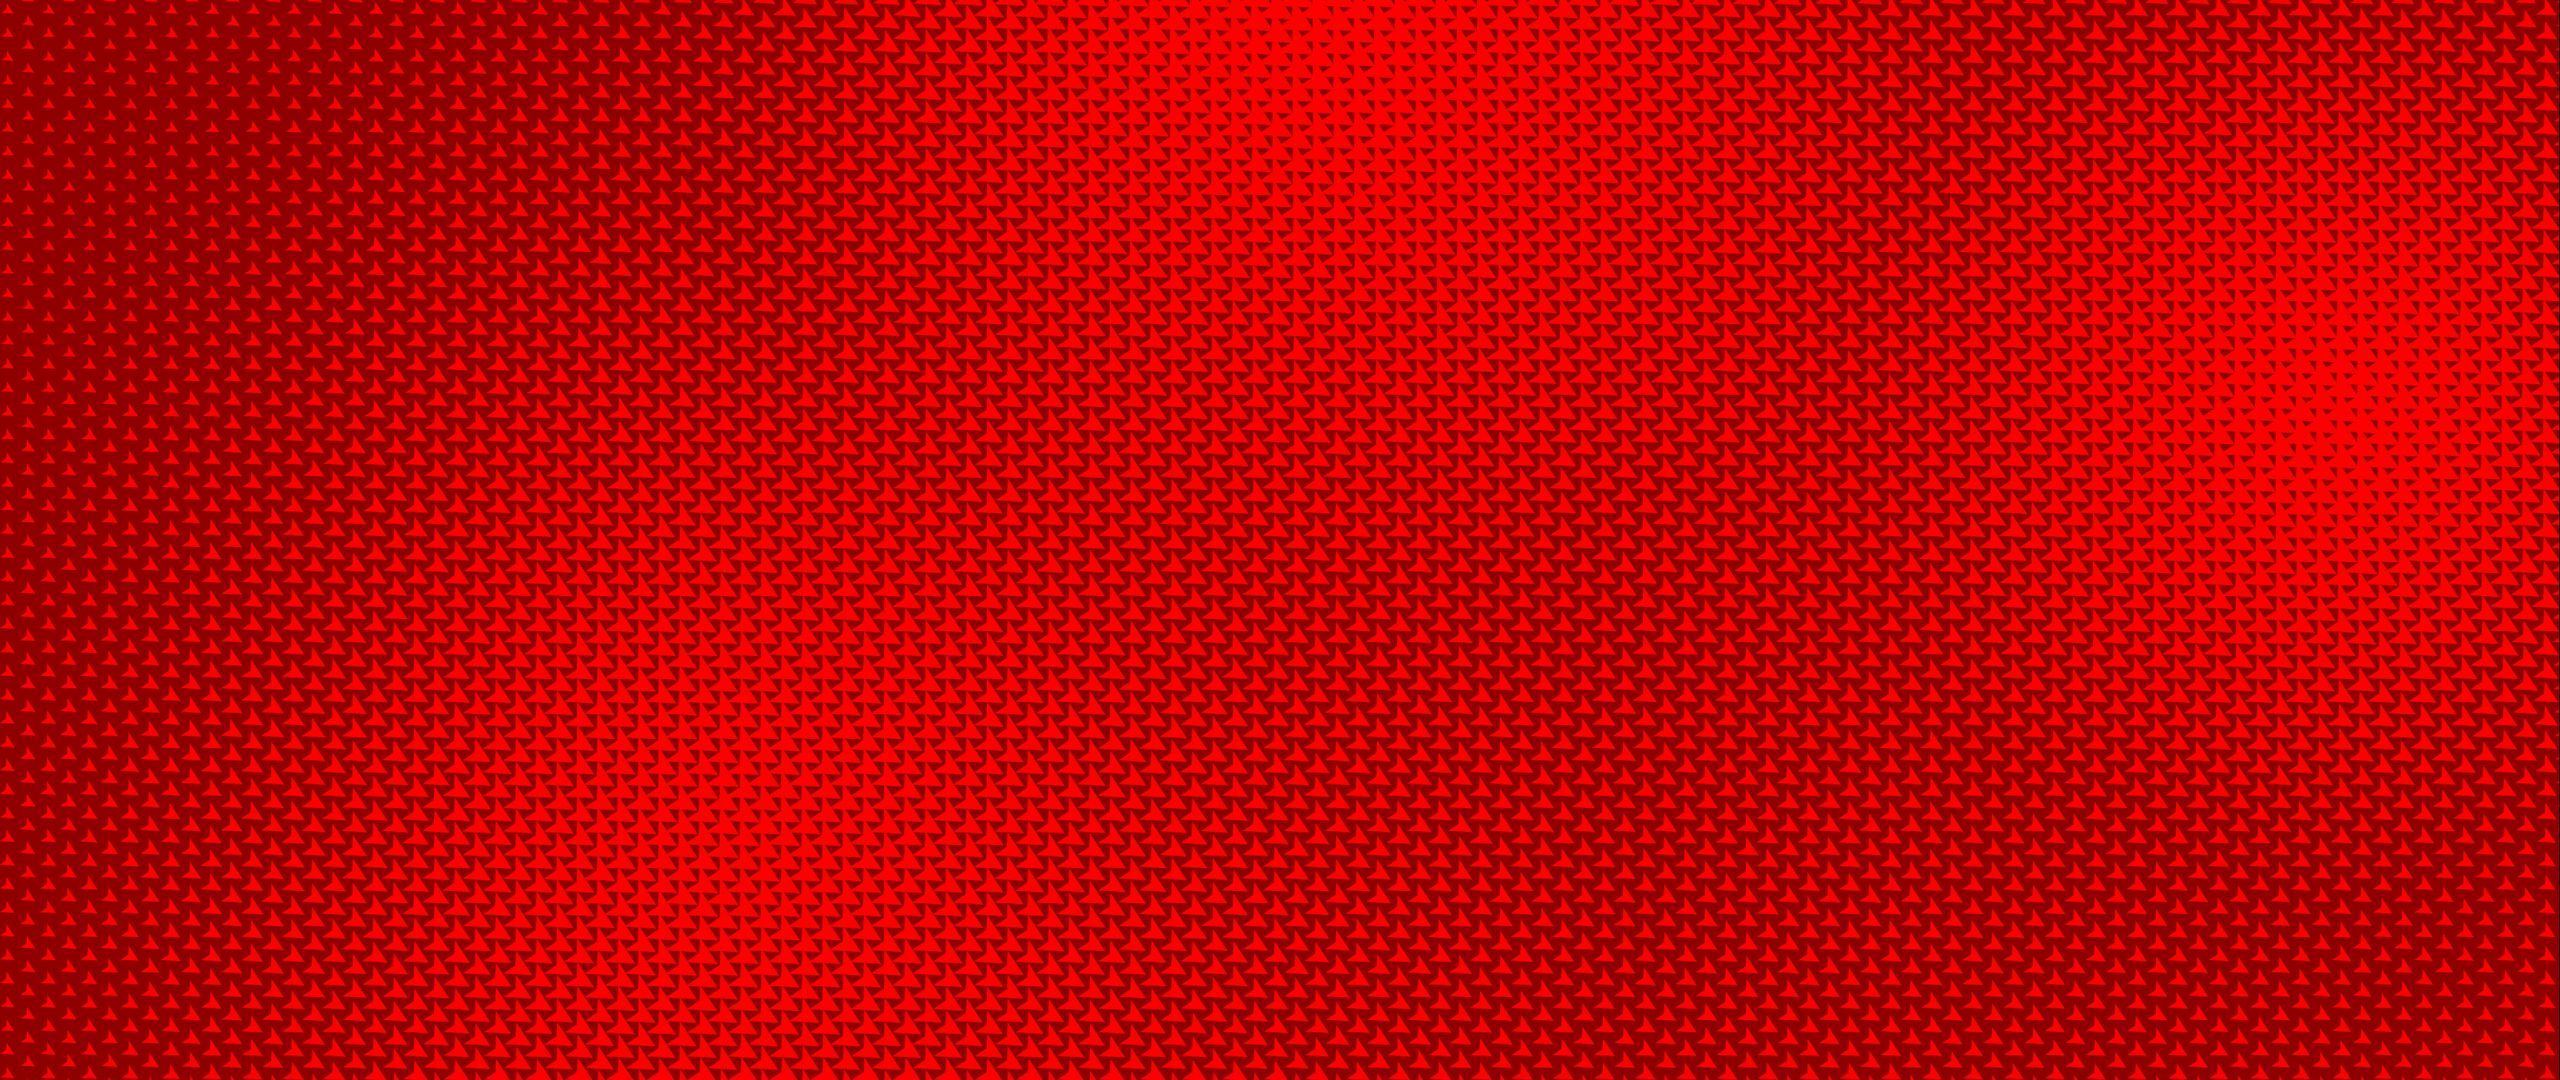 Download wallpaper 2560x1080 patterns, halftone, geometric, red